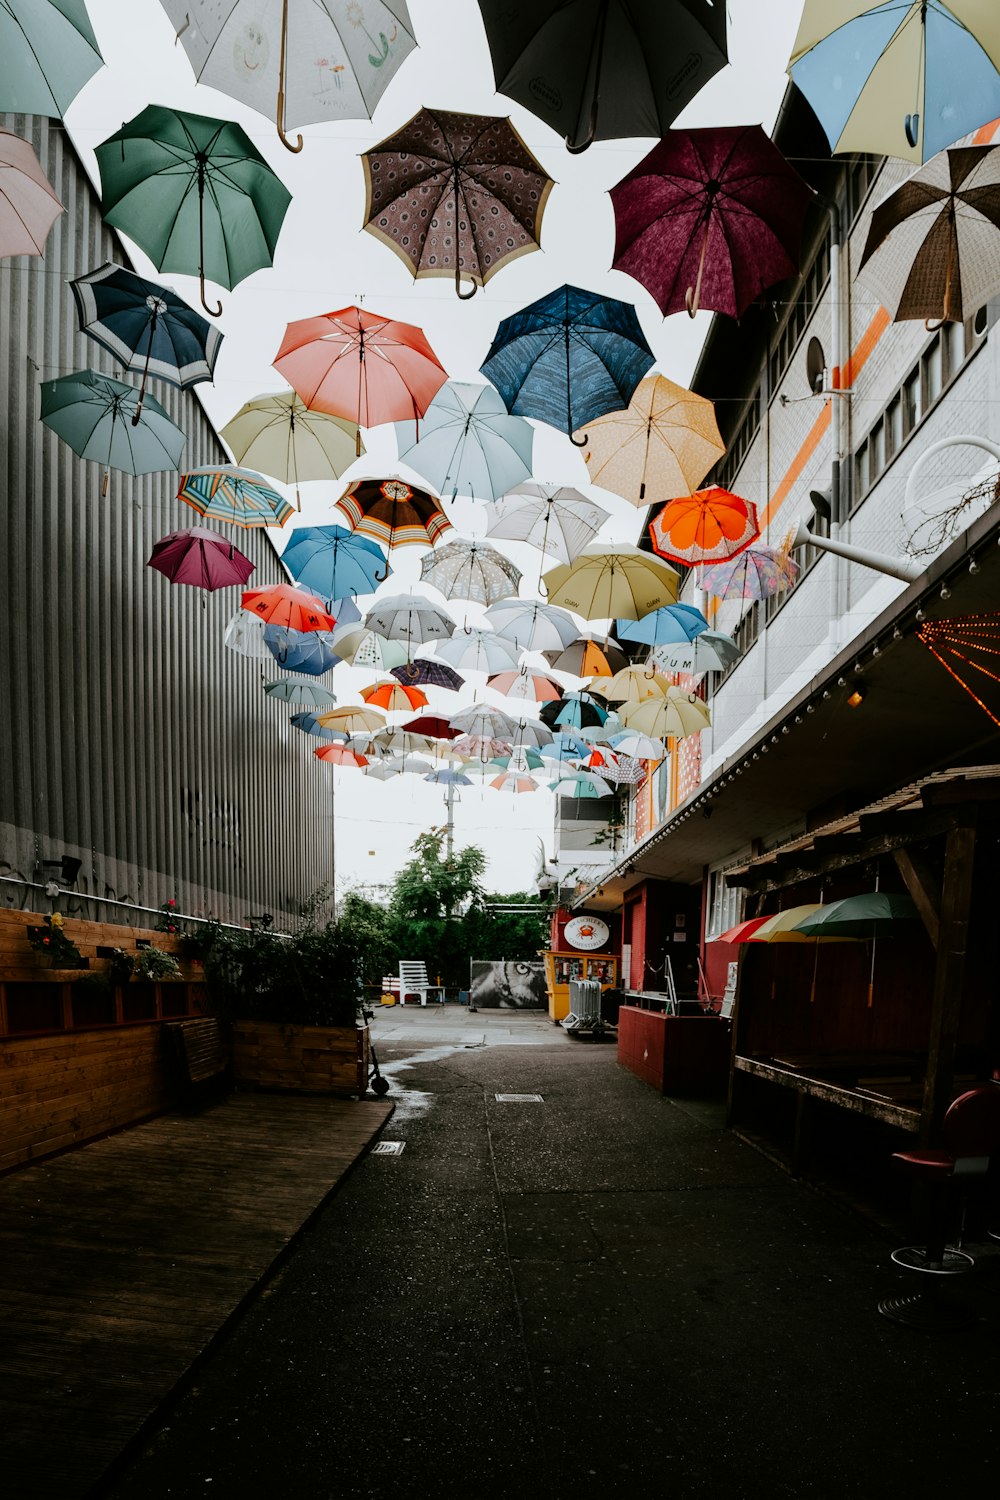 hanging umbrellas on street